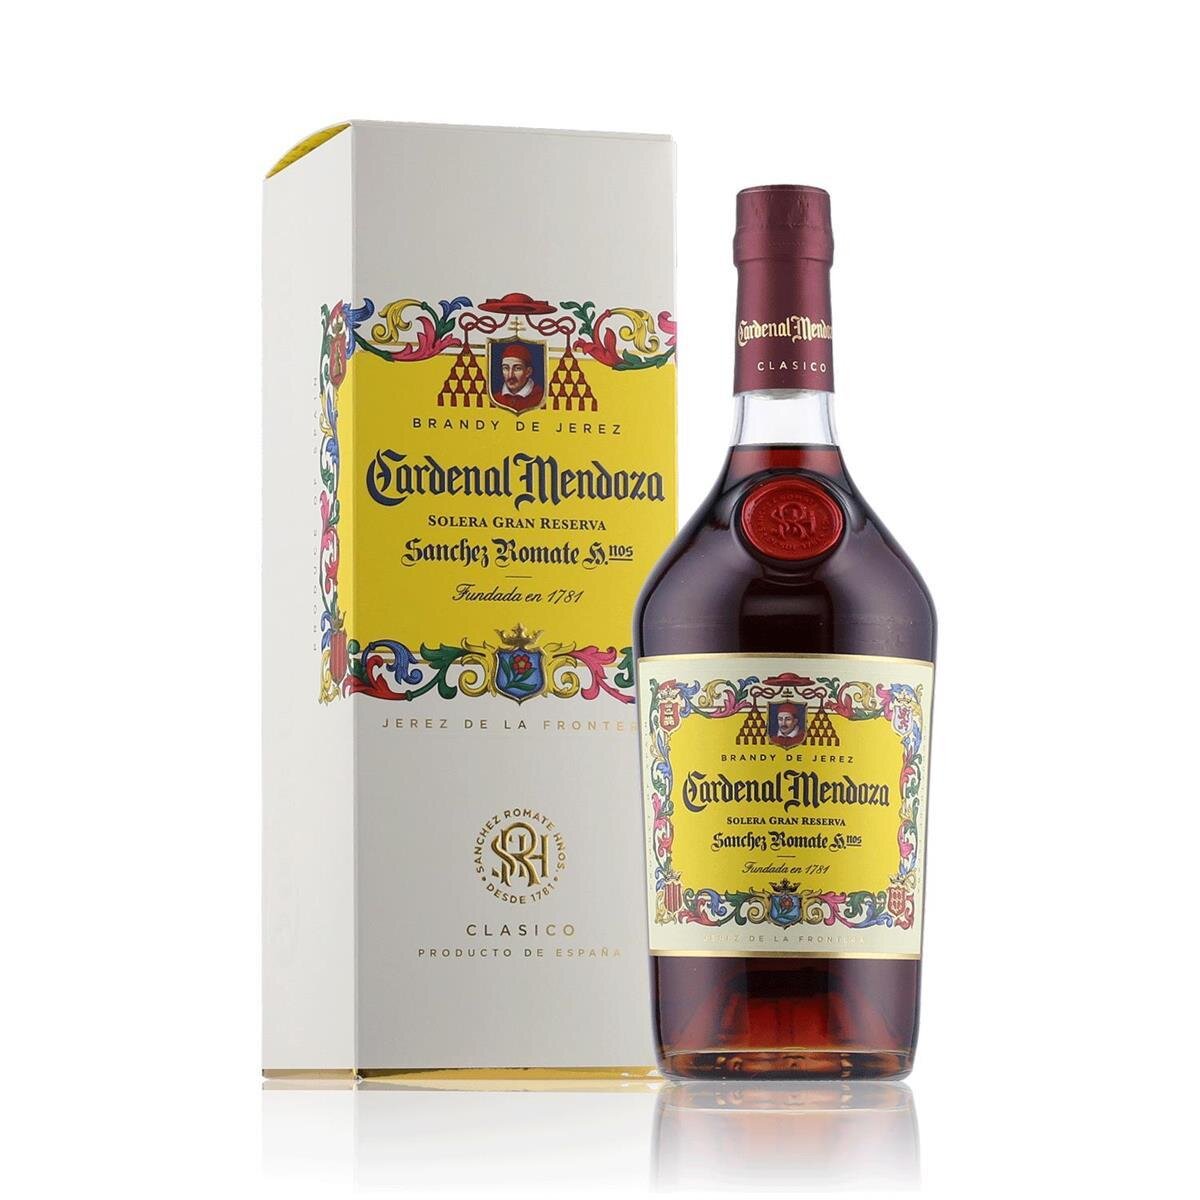 Cardenal Mendoza Solera Reserva Brandy Geschenk Gran Vol. 0,7l 40% in